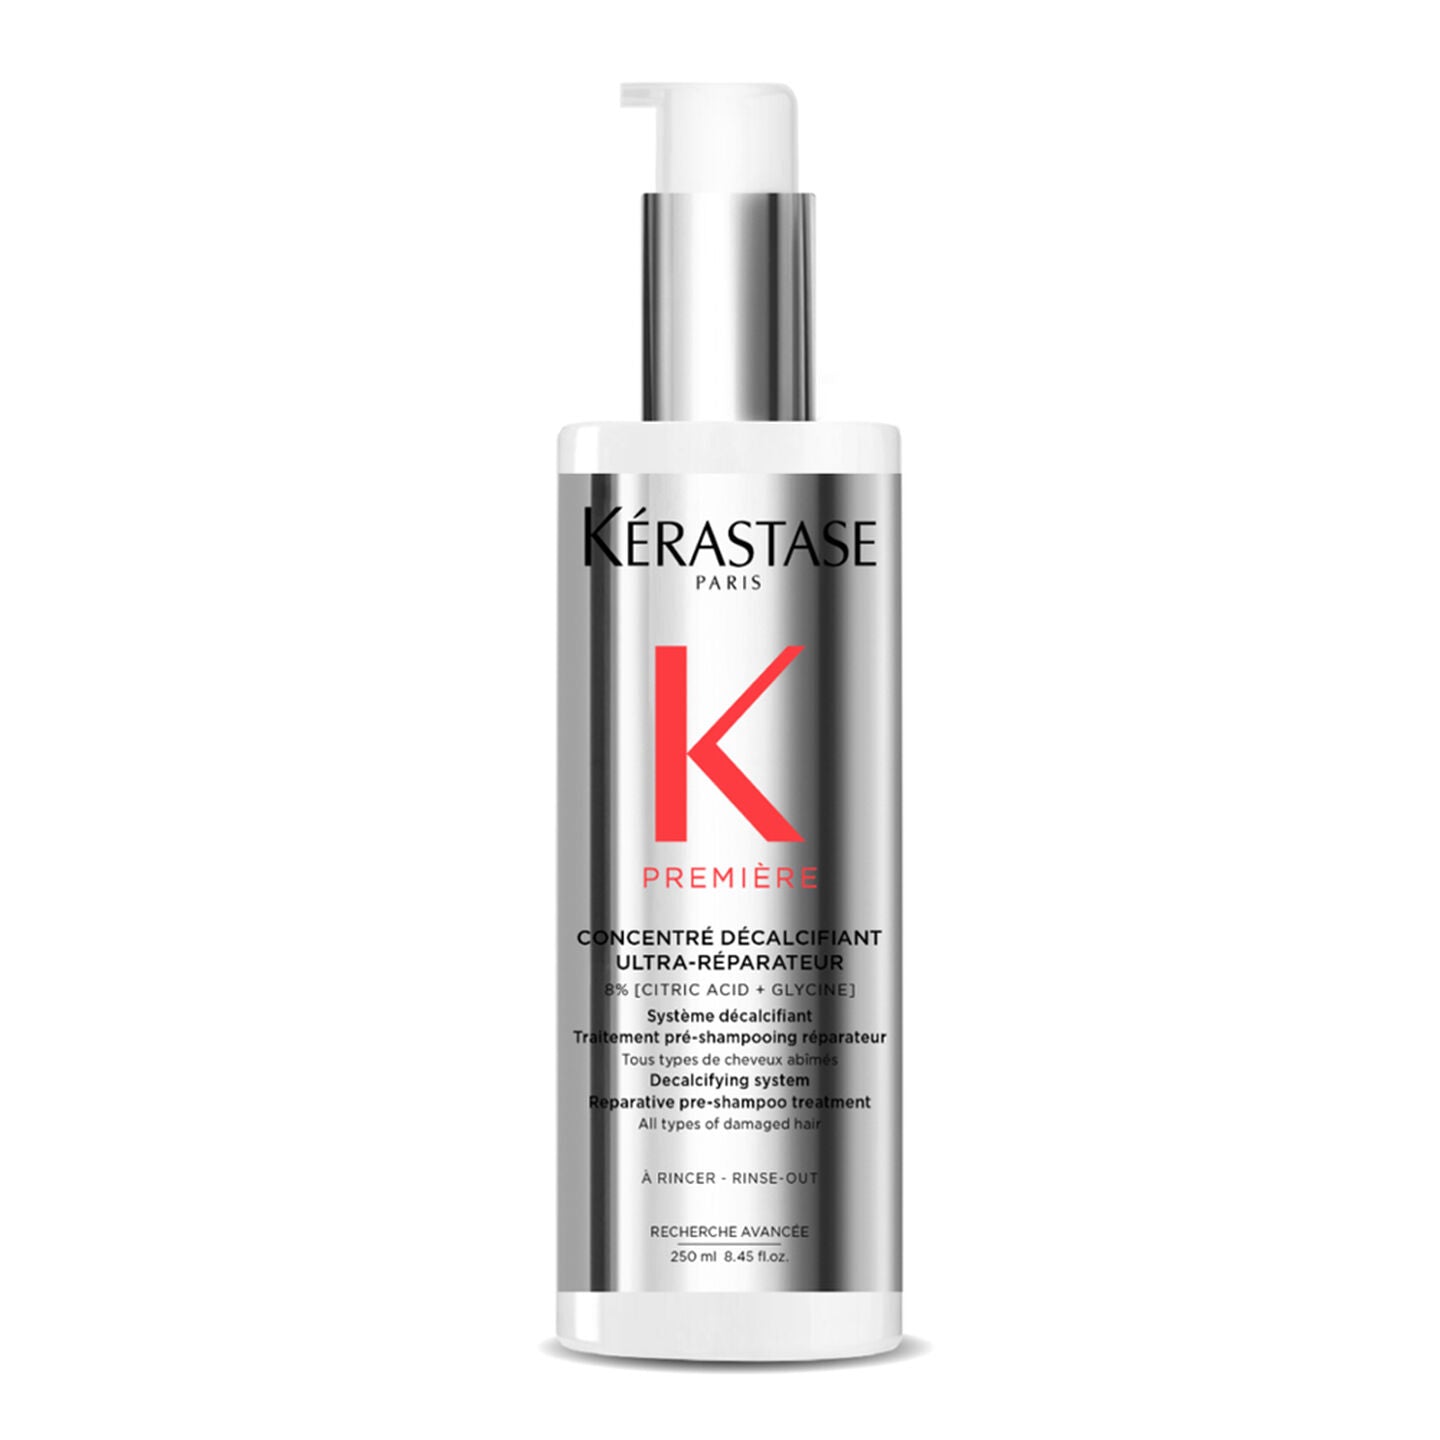 Kérastase - Première - Ultra-Repairing Decalcifying Concentrate Repairing Pre-Shampoo Treatment | MazenOnline